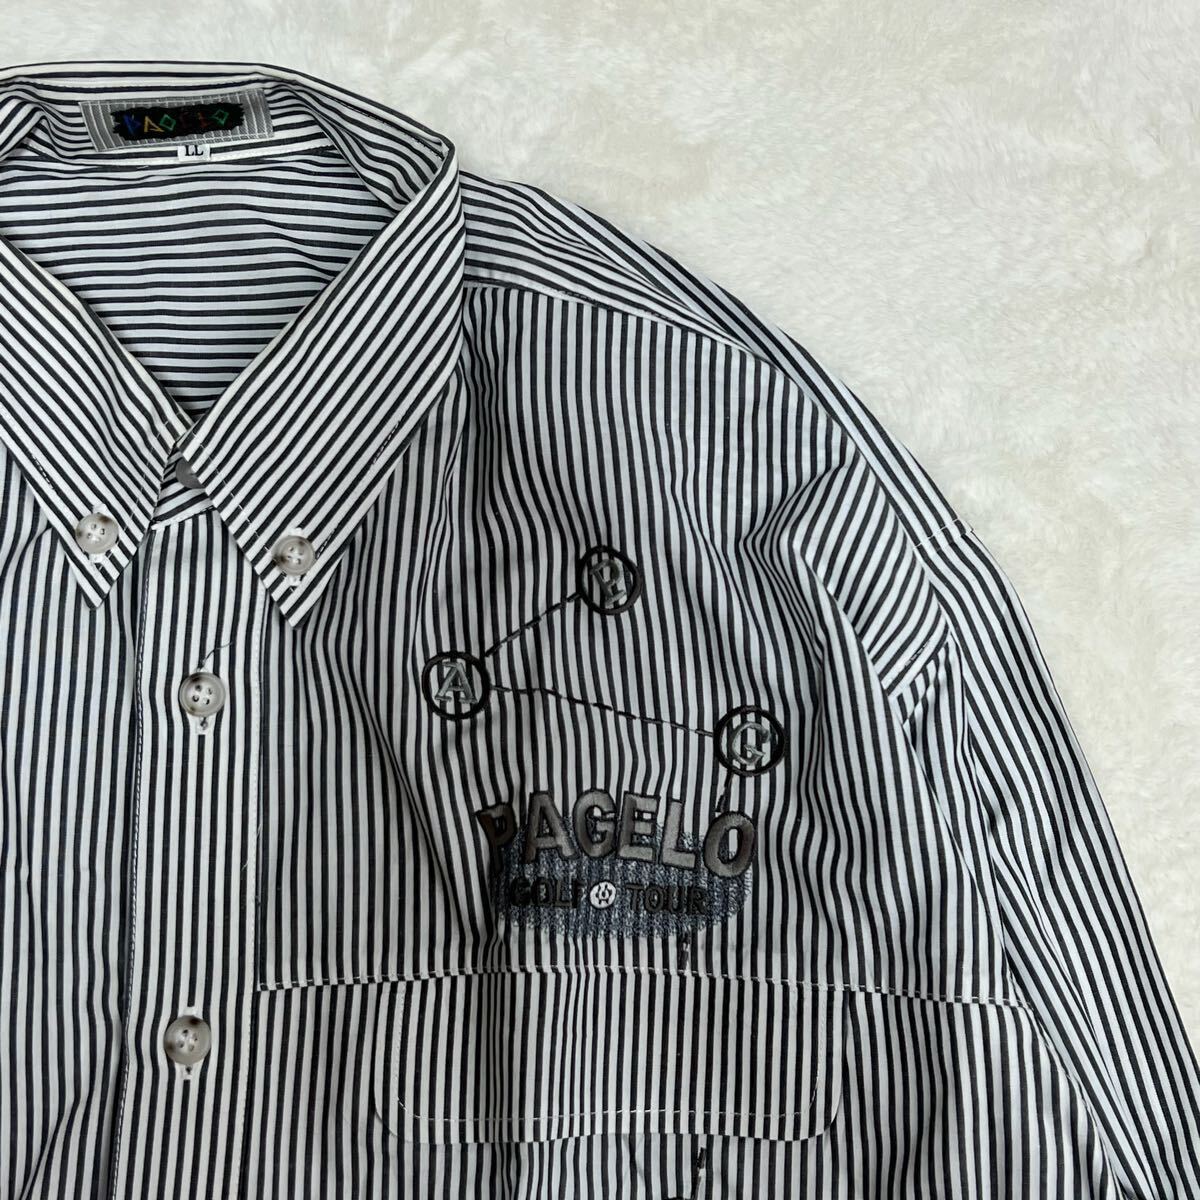 PAGELO パジェロ 長袖シャツ ストライプシャツ トップス ボタンダウンシャツ カジュアルシャツ コットン100% メンズLLサイズ 日本製 _画像2